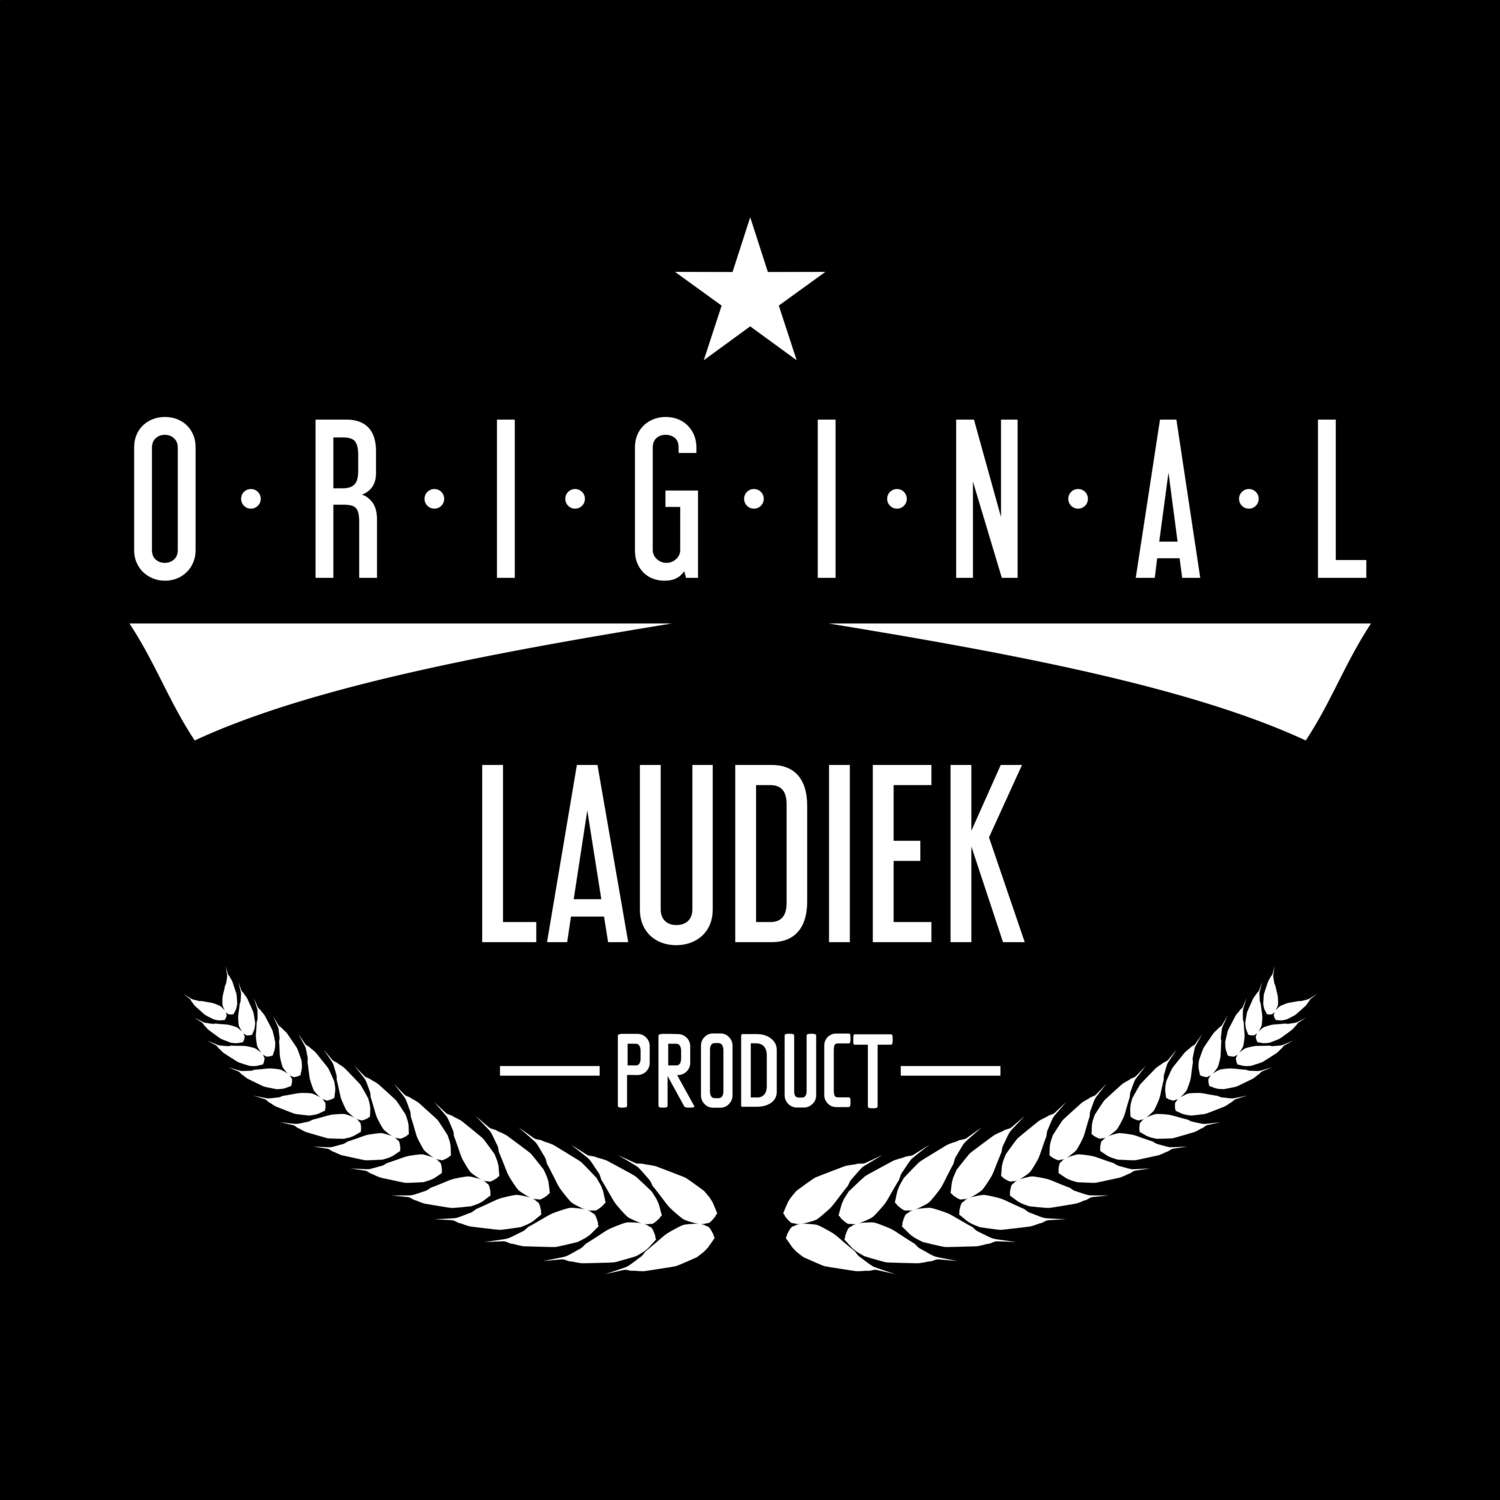 Laudiek T-Shirt »Original Product«